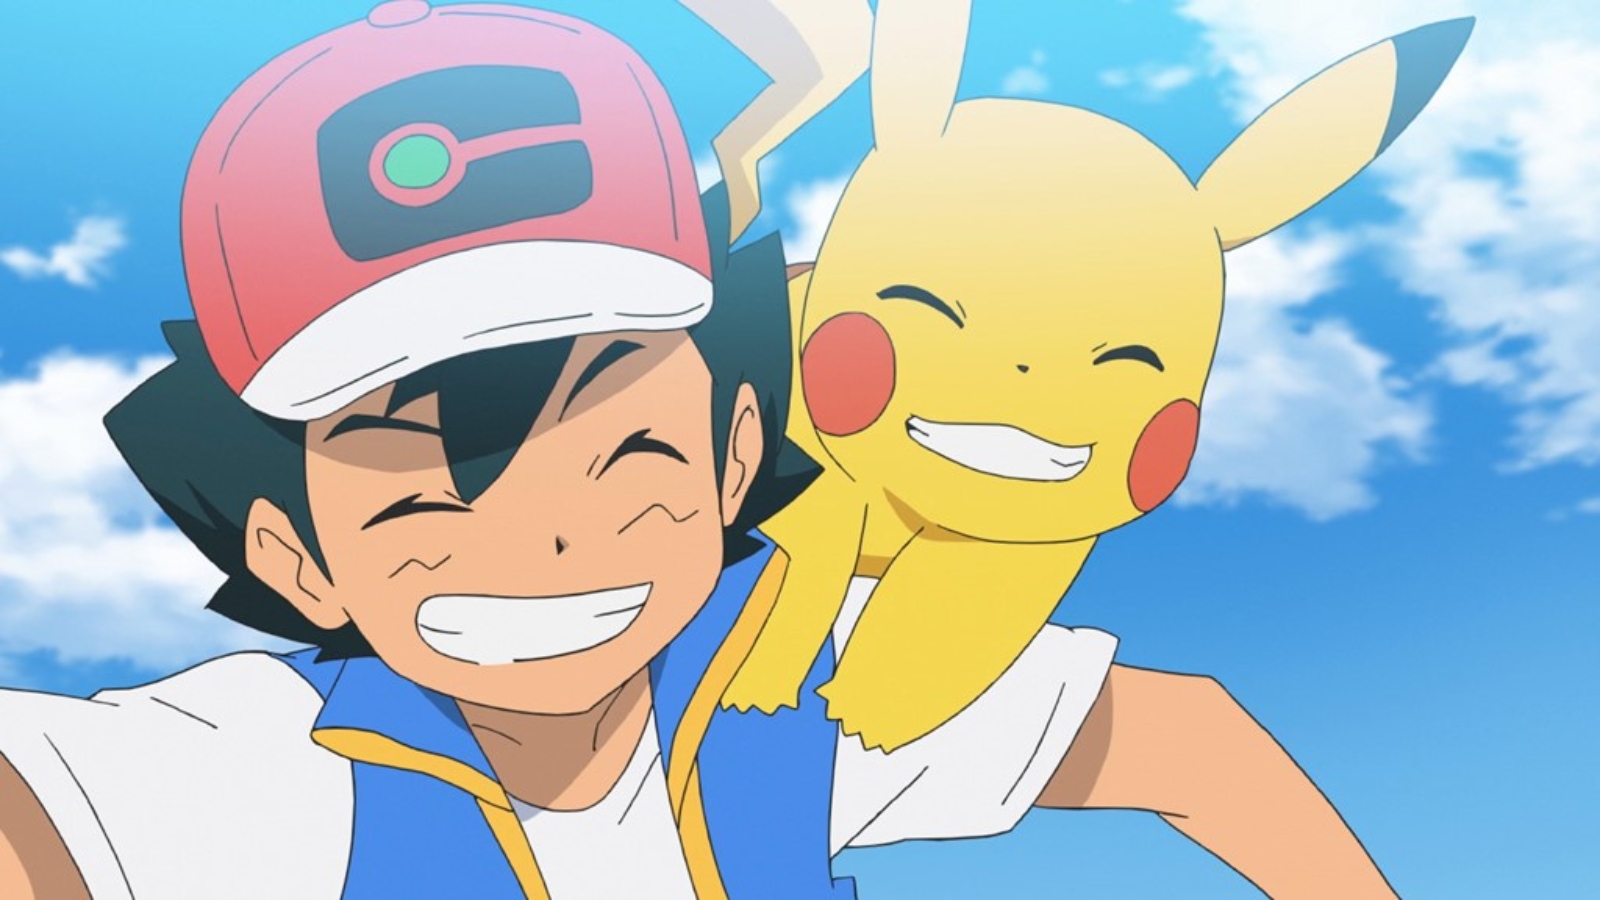 Ash Ketchums Voice Actor Breaks Silence Over Pokémon Exit